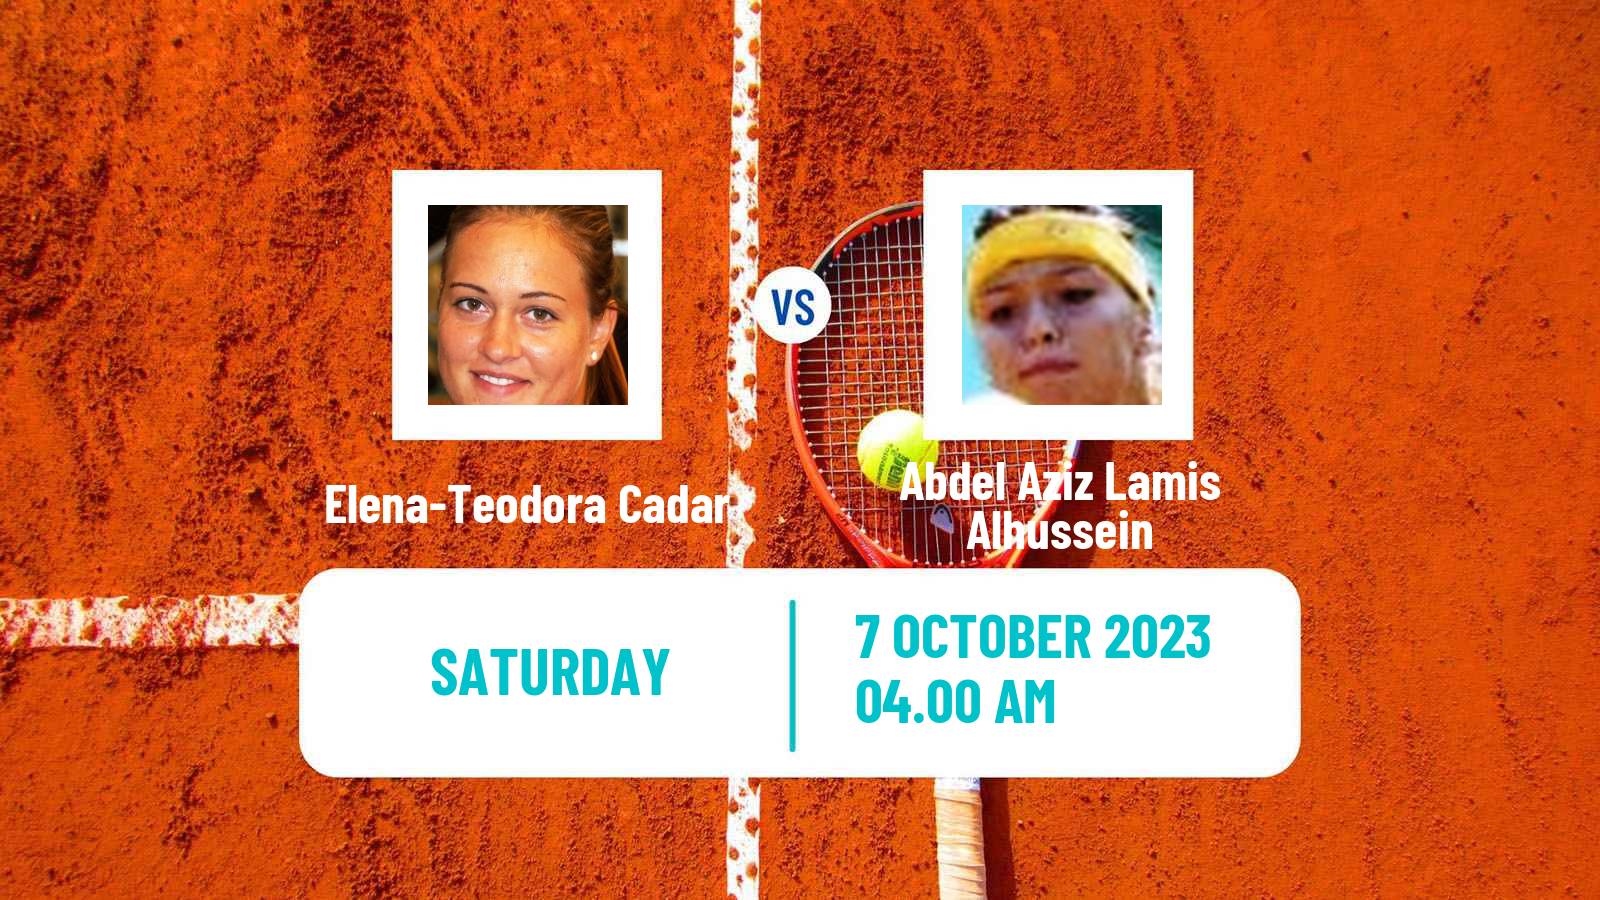 Tennis ITF W15 Sharm Elsheikh 13 Women Elena-Teodora Cadar - Abdel Aziz Lamis Alhussein